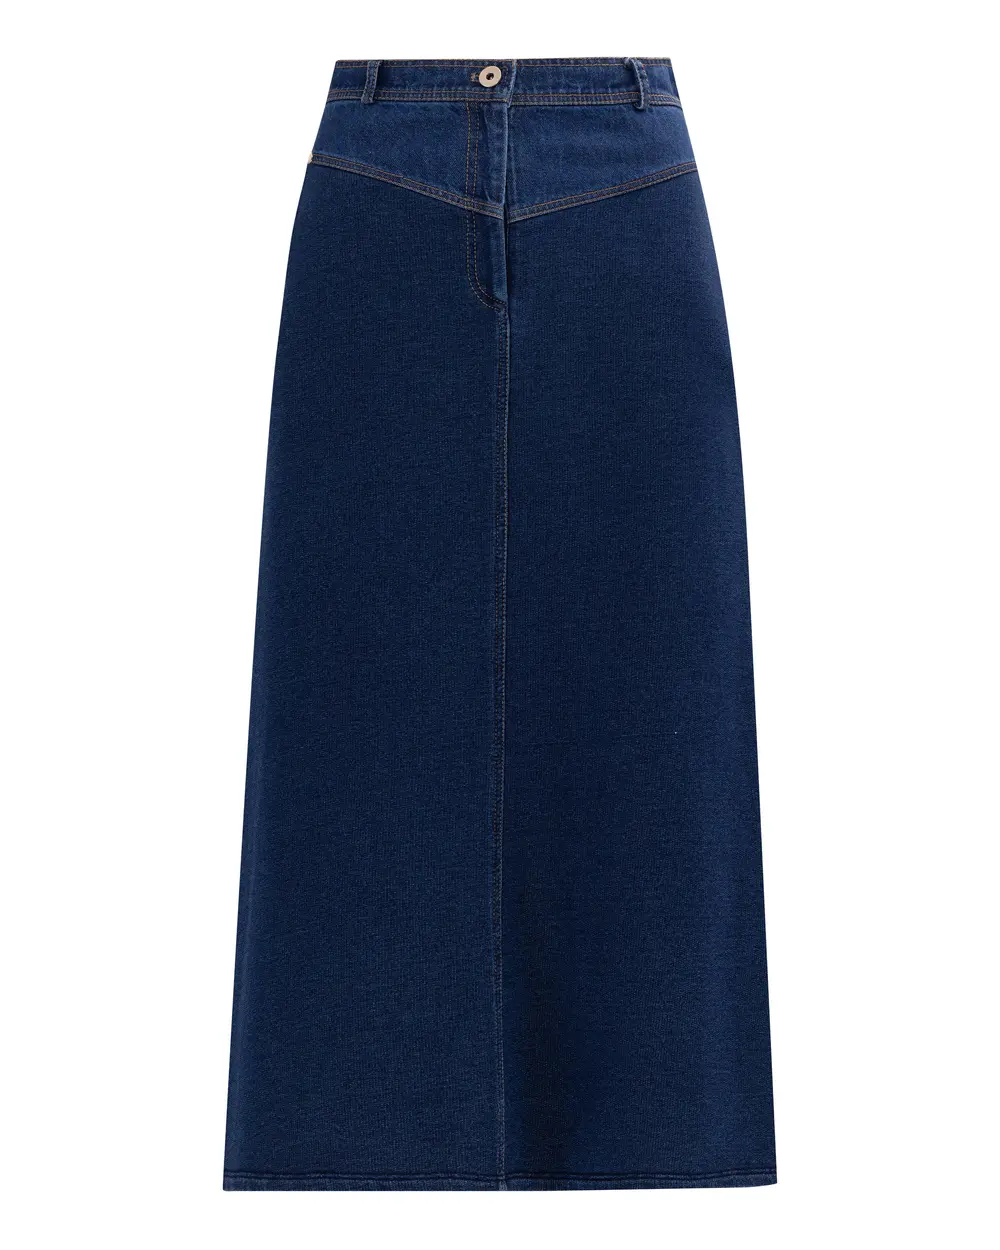 Midi Length Jean Skirt with Pockets